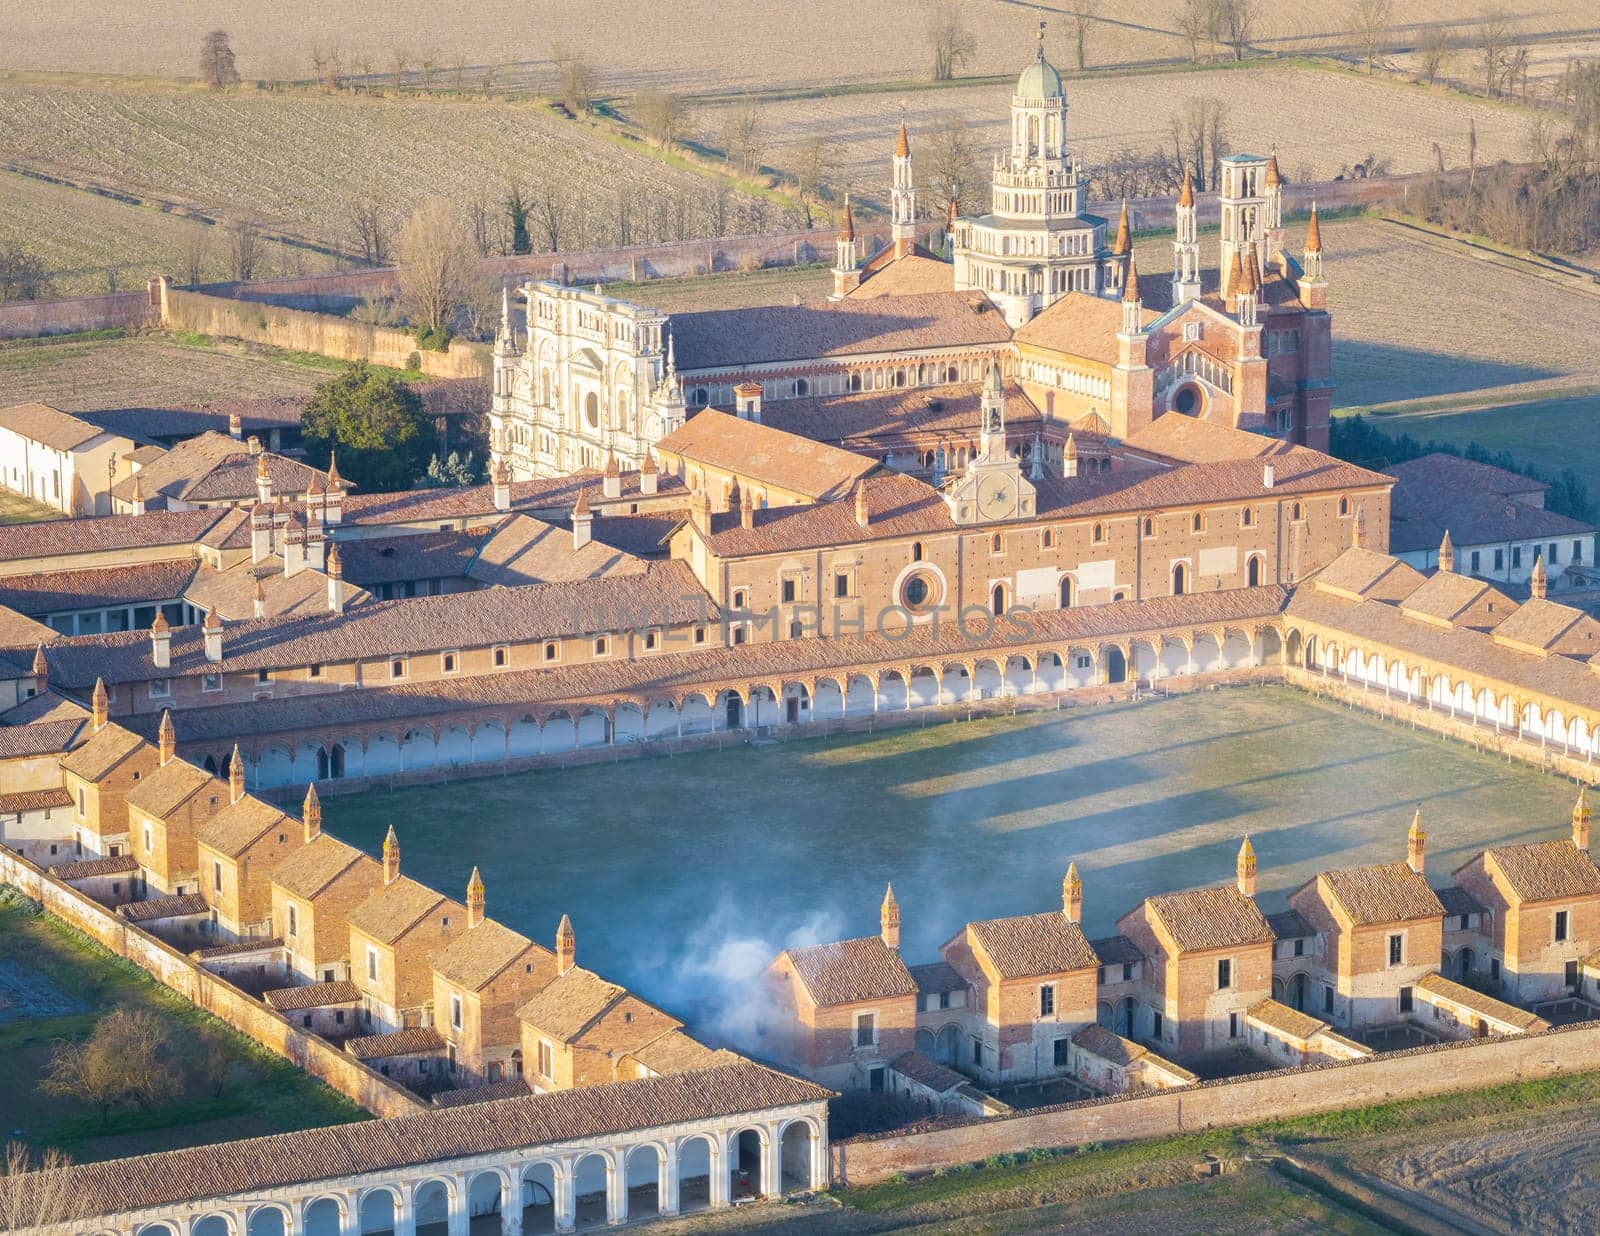 Landscape view of Certosa of Pavia sanctuary by Robertobinetti70